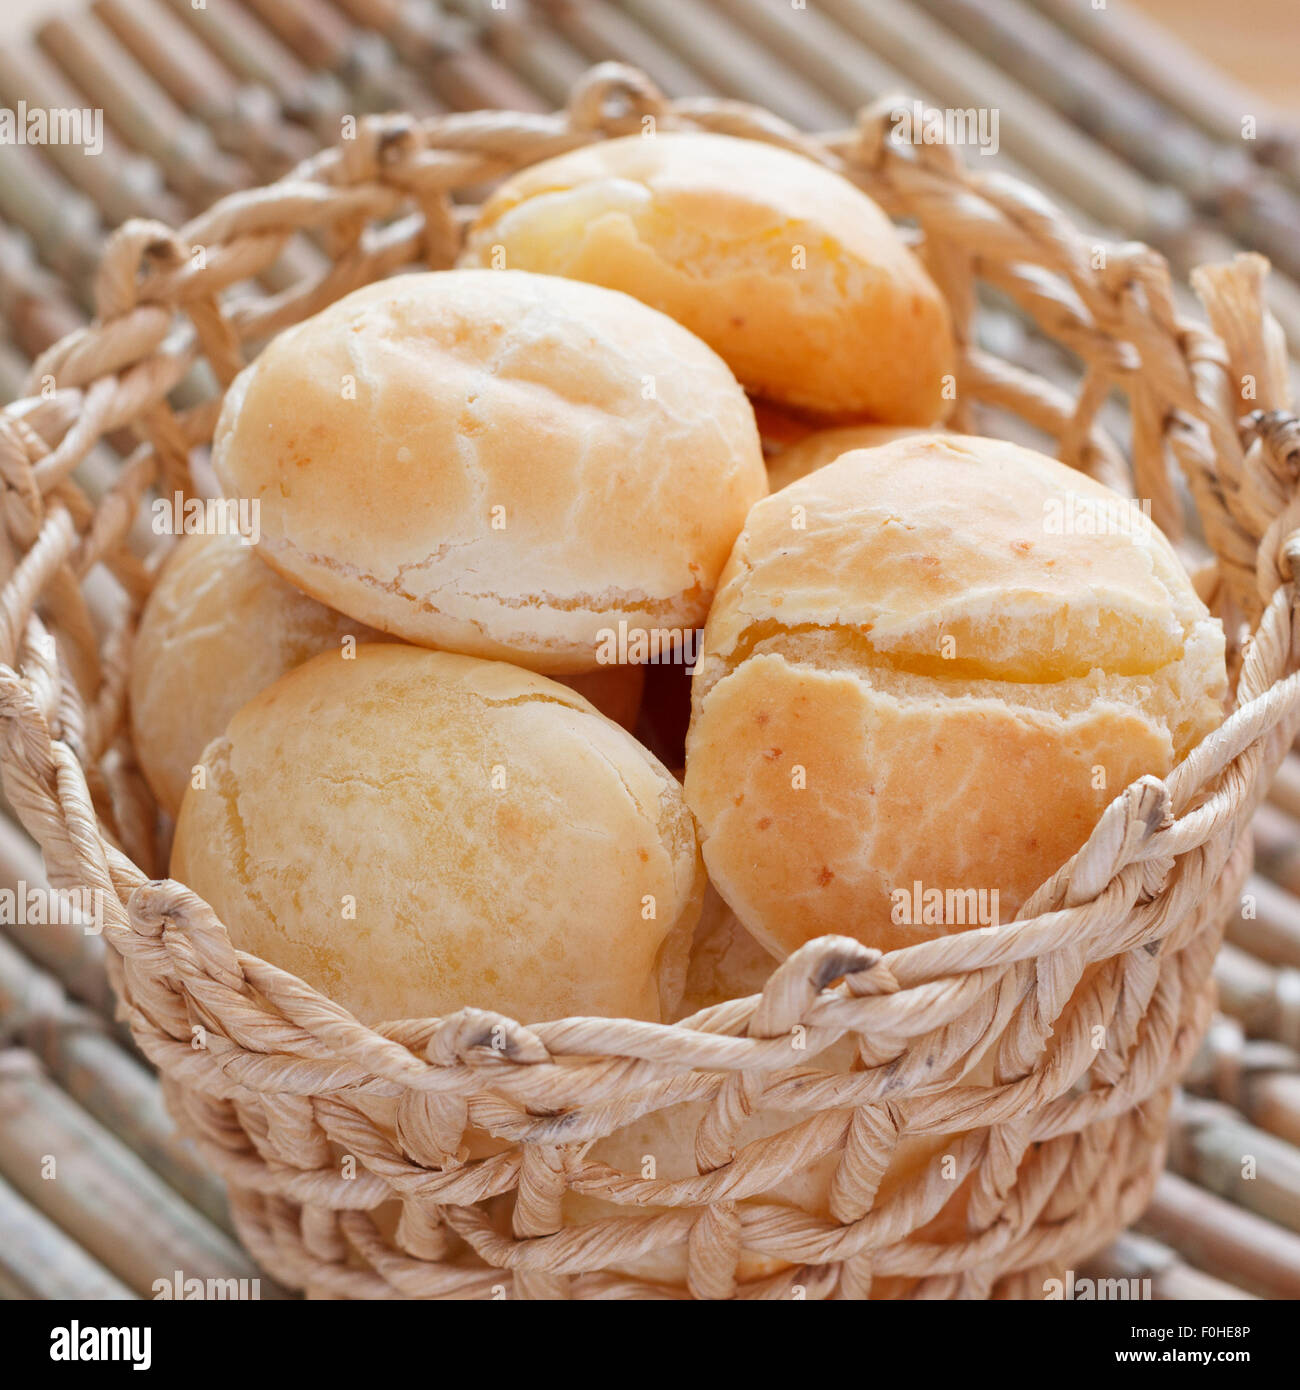 Brazilian snack cheese bread (pao de queijo) in wicker basket on wooden table. Selective focus Stock Photo